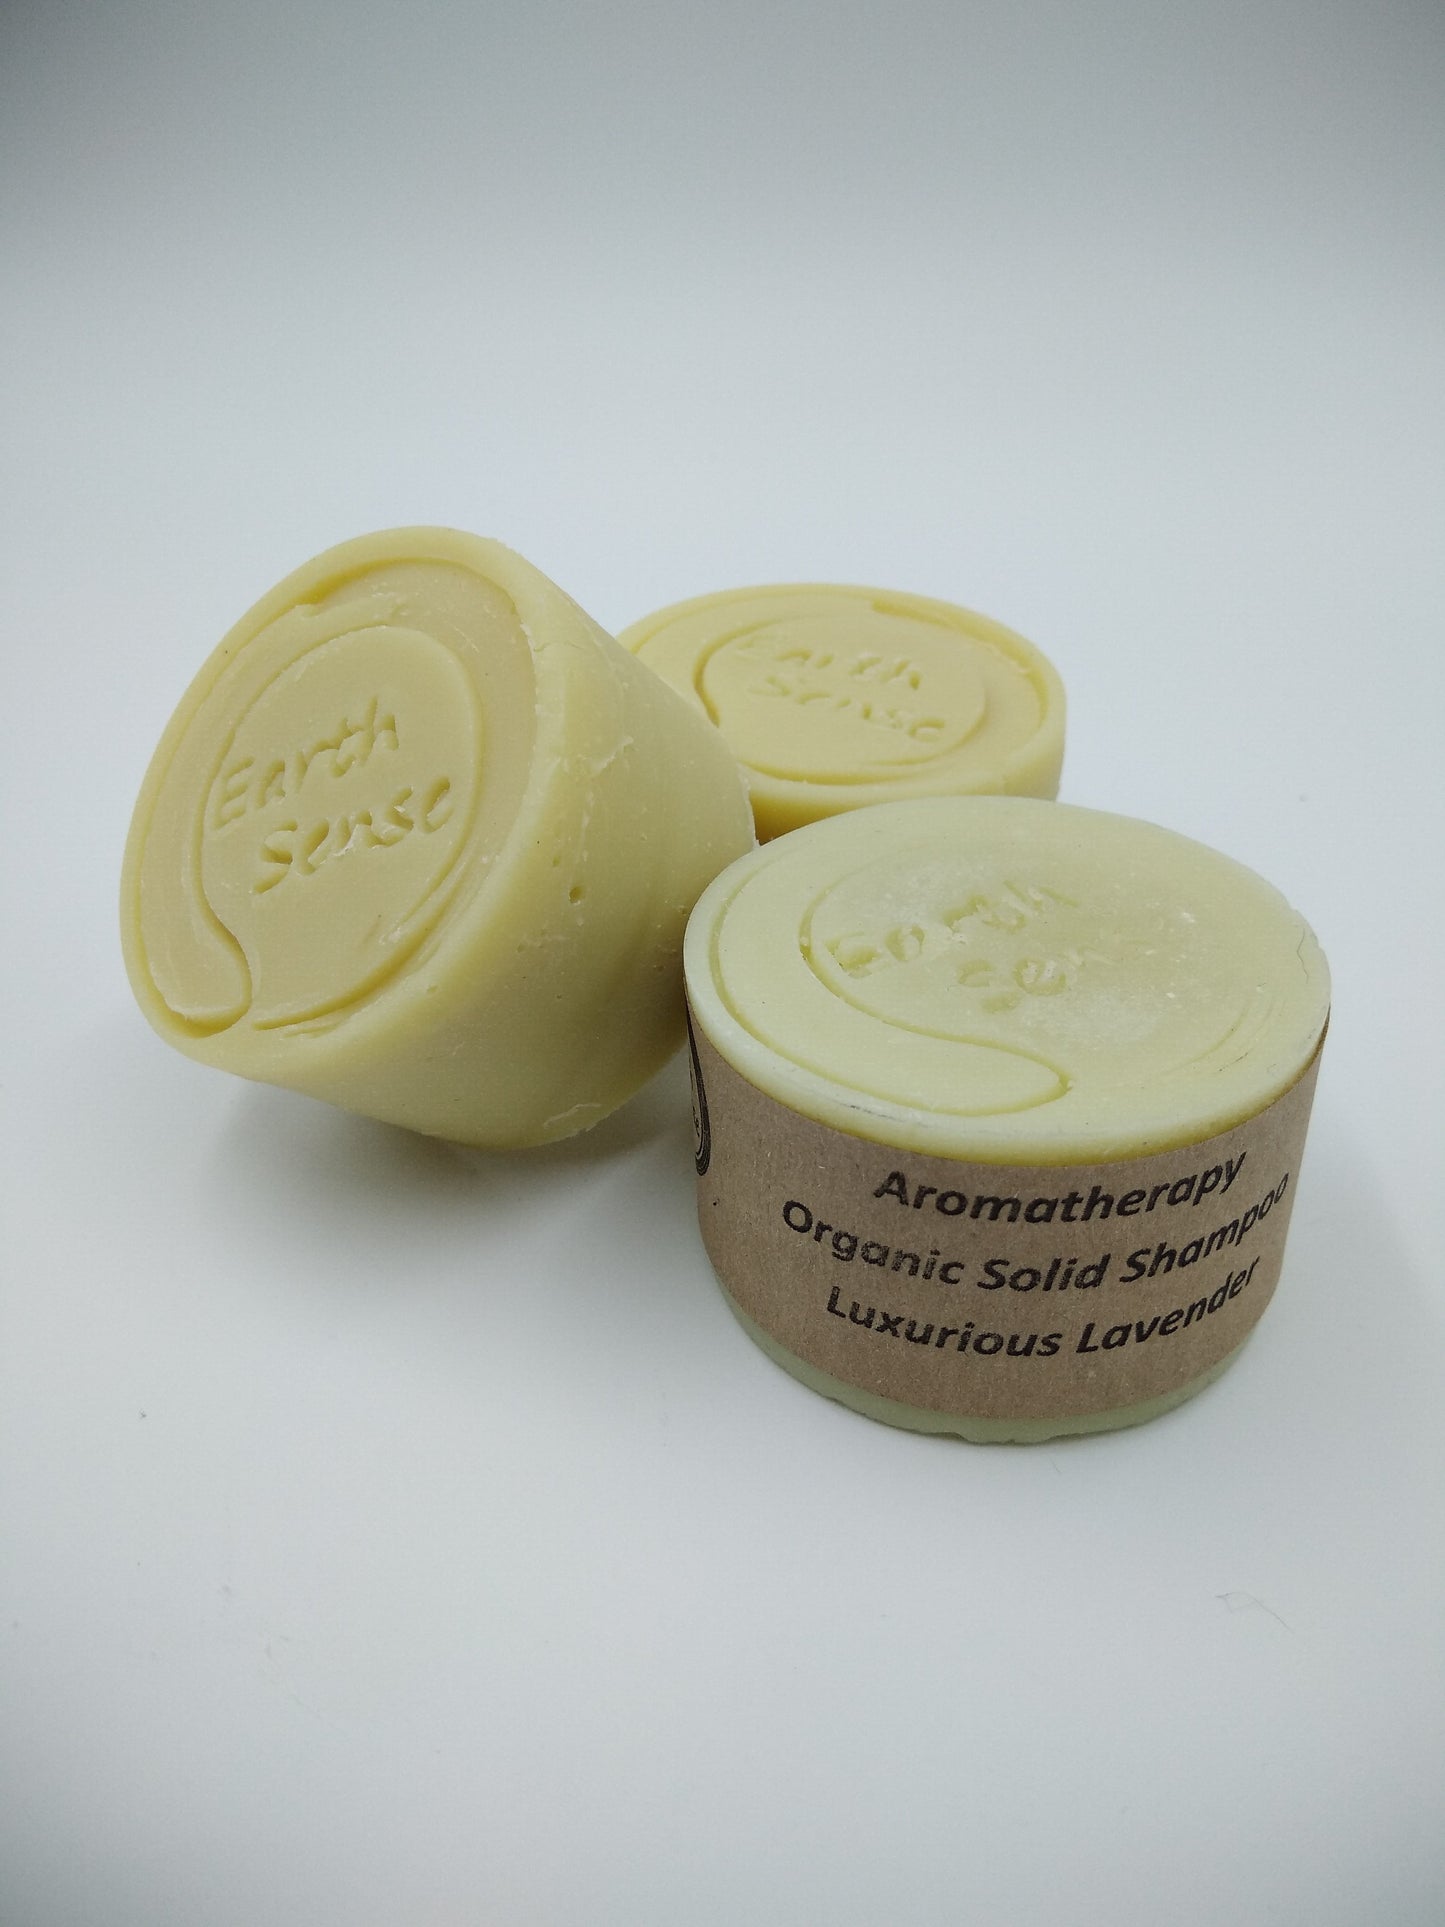 MINI BUNDLE - 4 x 60g Organic Certified Solid Shampoo - Lavender & Mint - Dry & all Hair Types - Earthsenseorganics